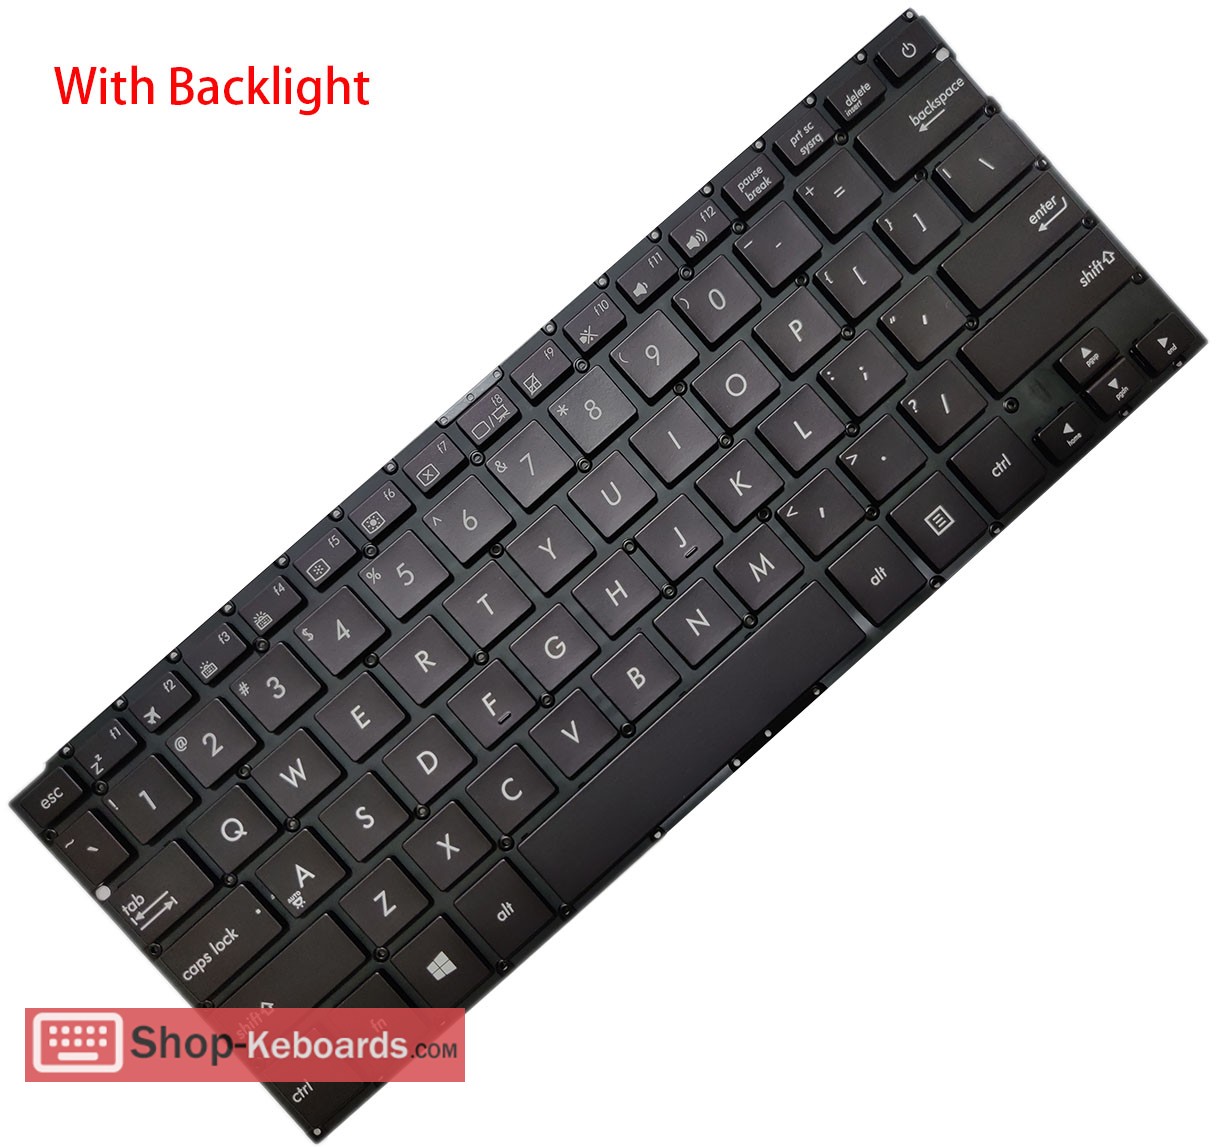 Asus ZENBOOK zenbook-ux410ua-gv067t-GV067T  Keyboard replacement